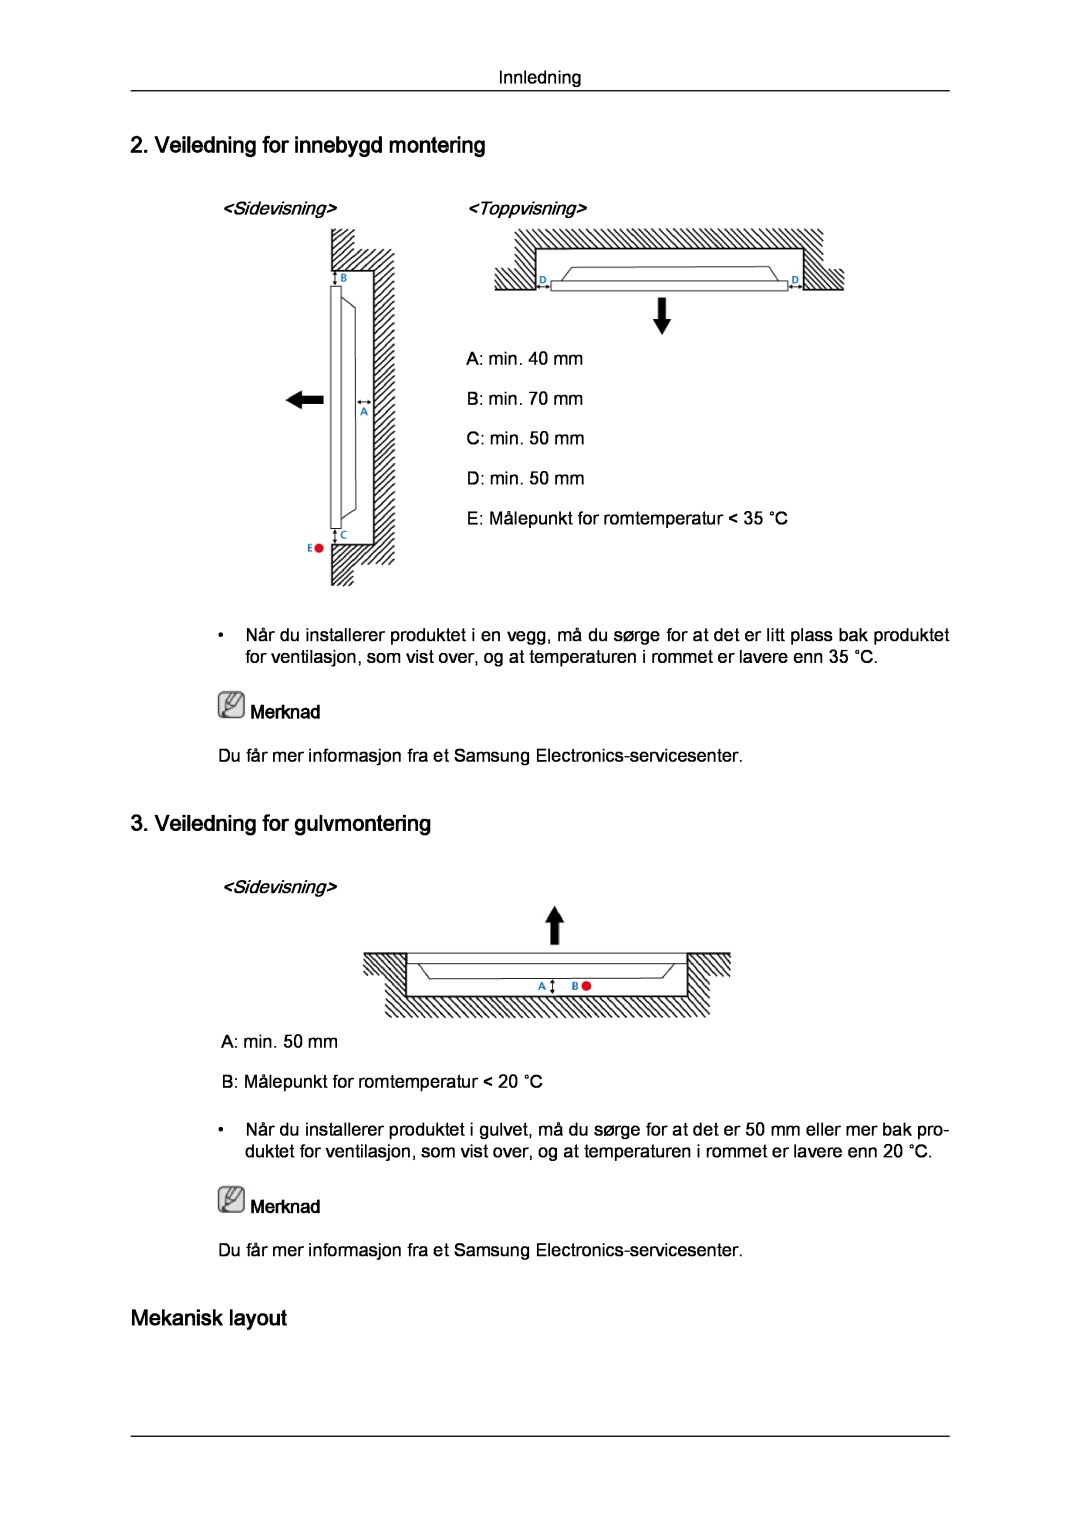 Samsung LH32CRSMBC/EN manual Veiledning for innebygd montering, Veiledning for gulvmontering, Mekanisk layout, Merknad 